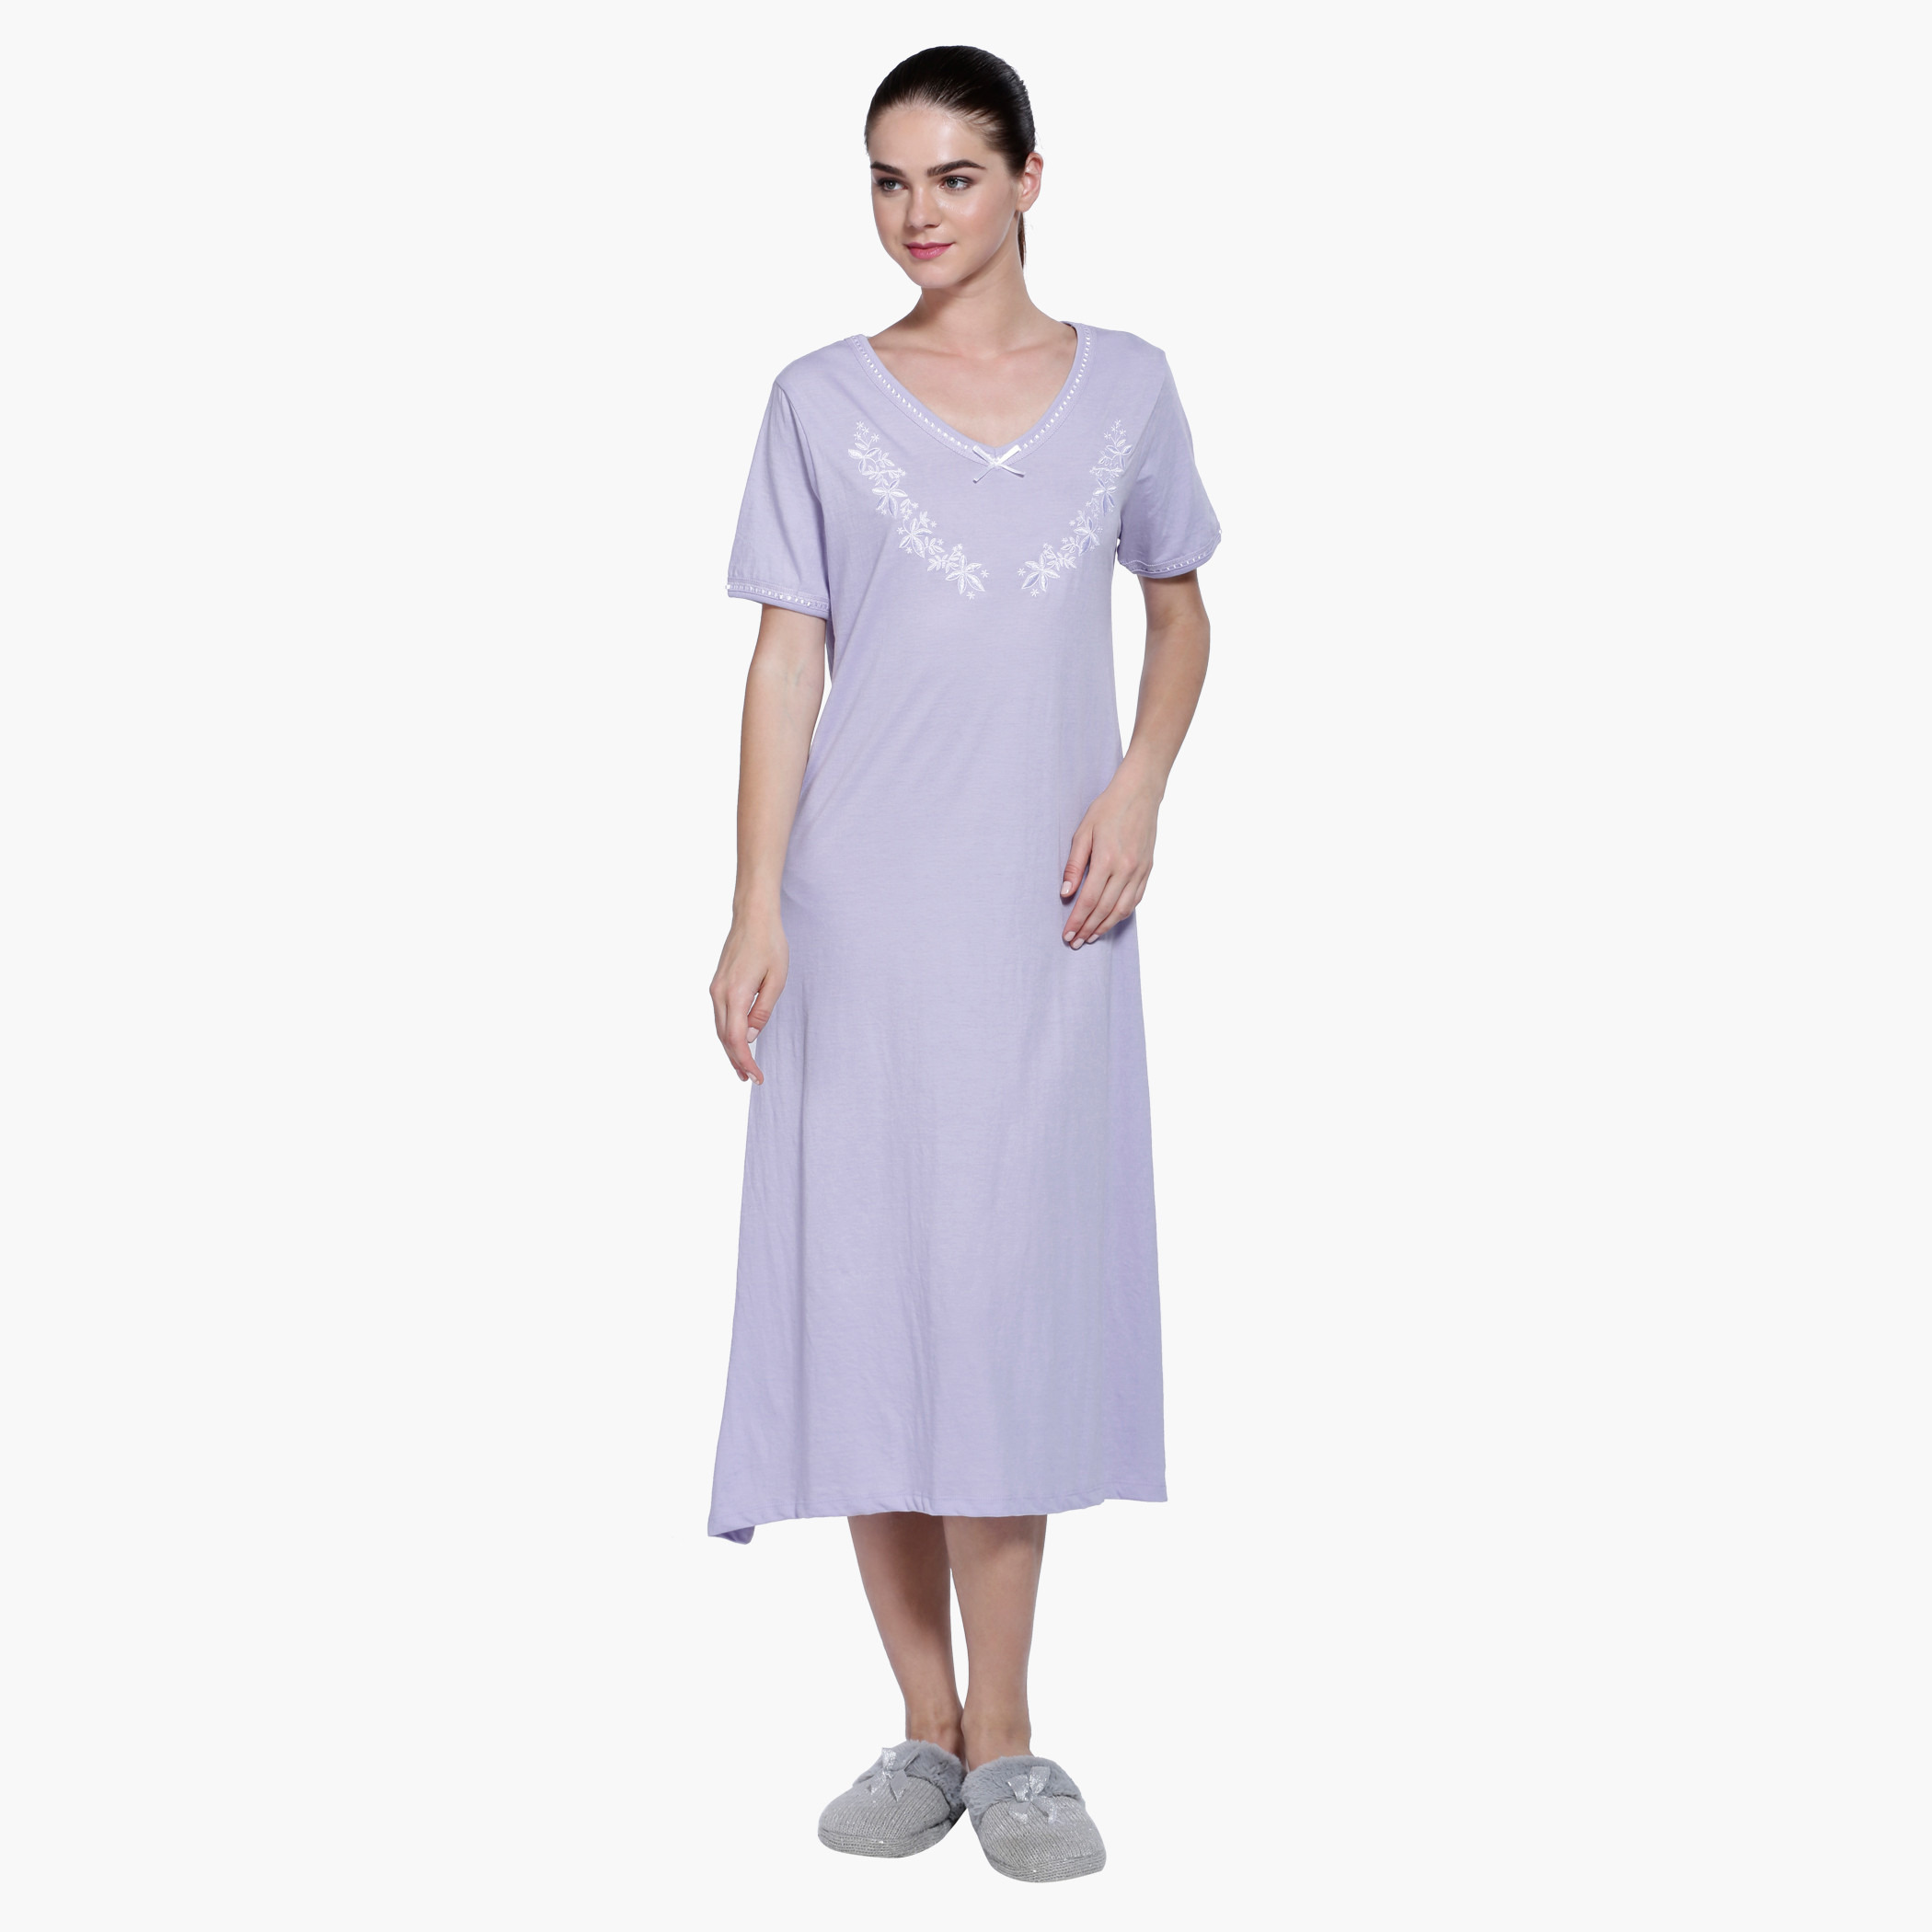 Buy Juniors Printed Cold Shoulder Dress Online for Girls | Centrepoint UAE